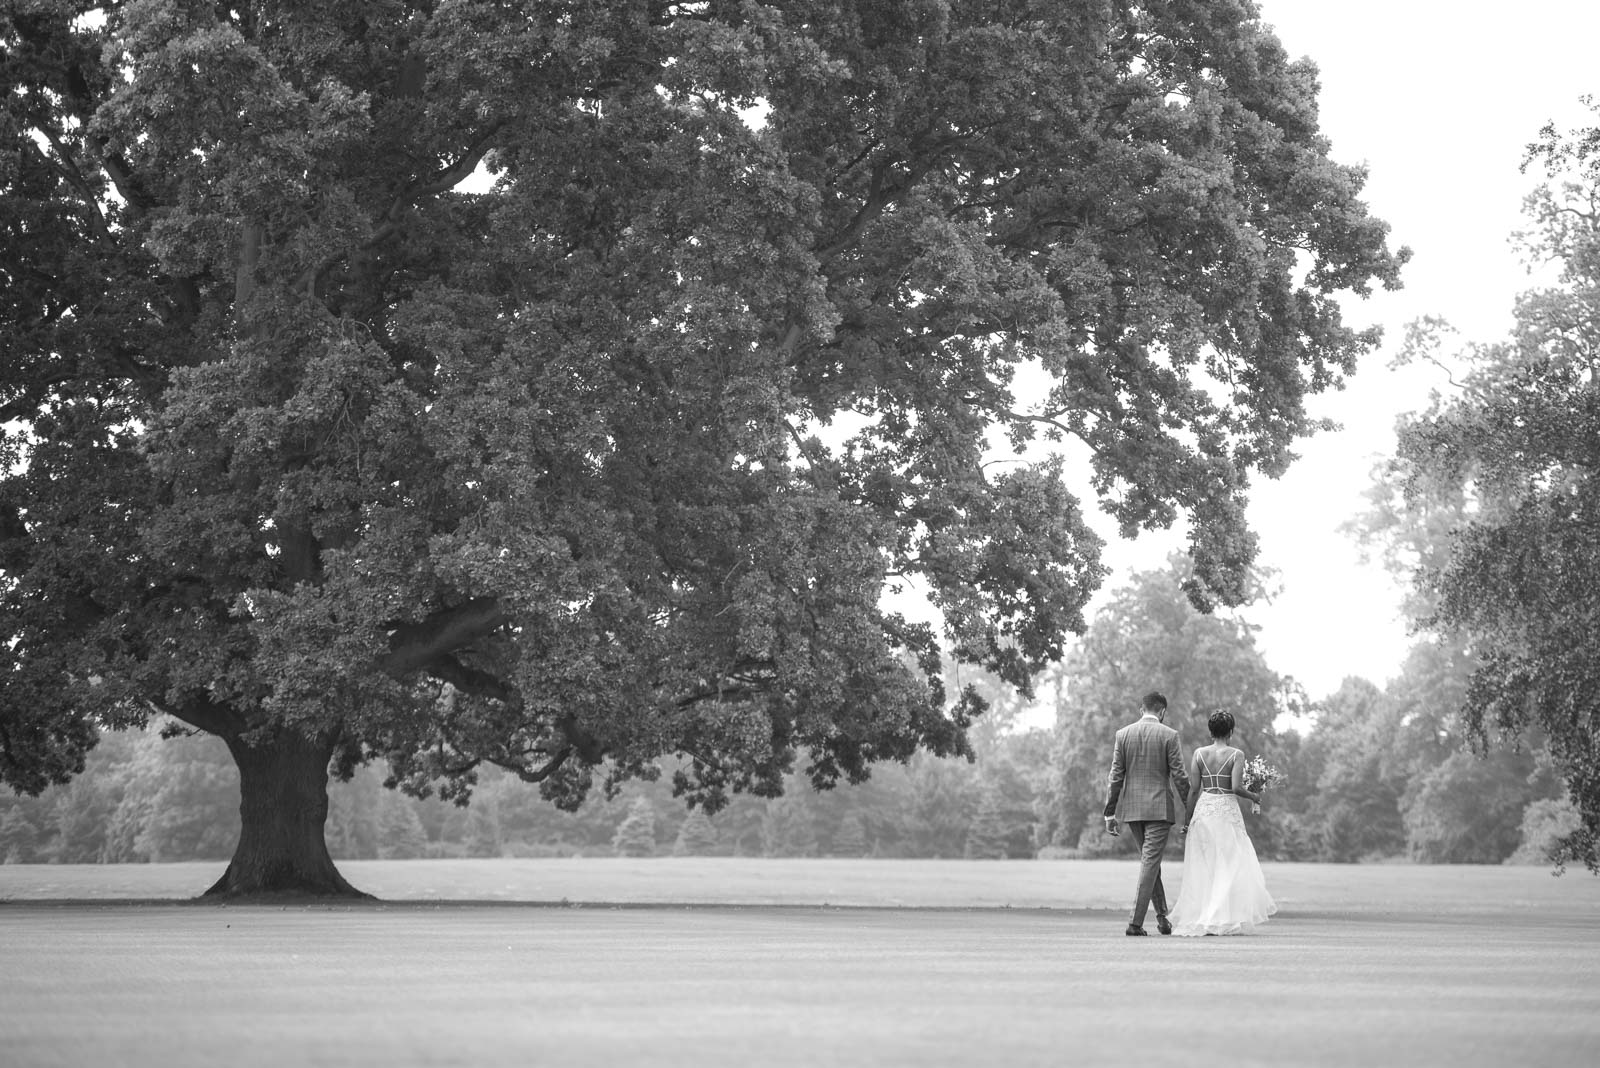 Wedding photoshoot at Ditton Park Manor